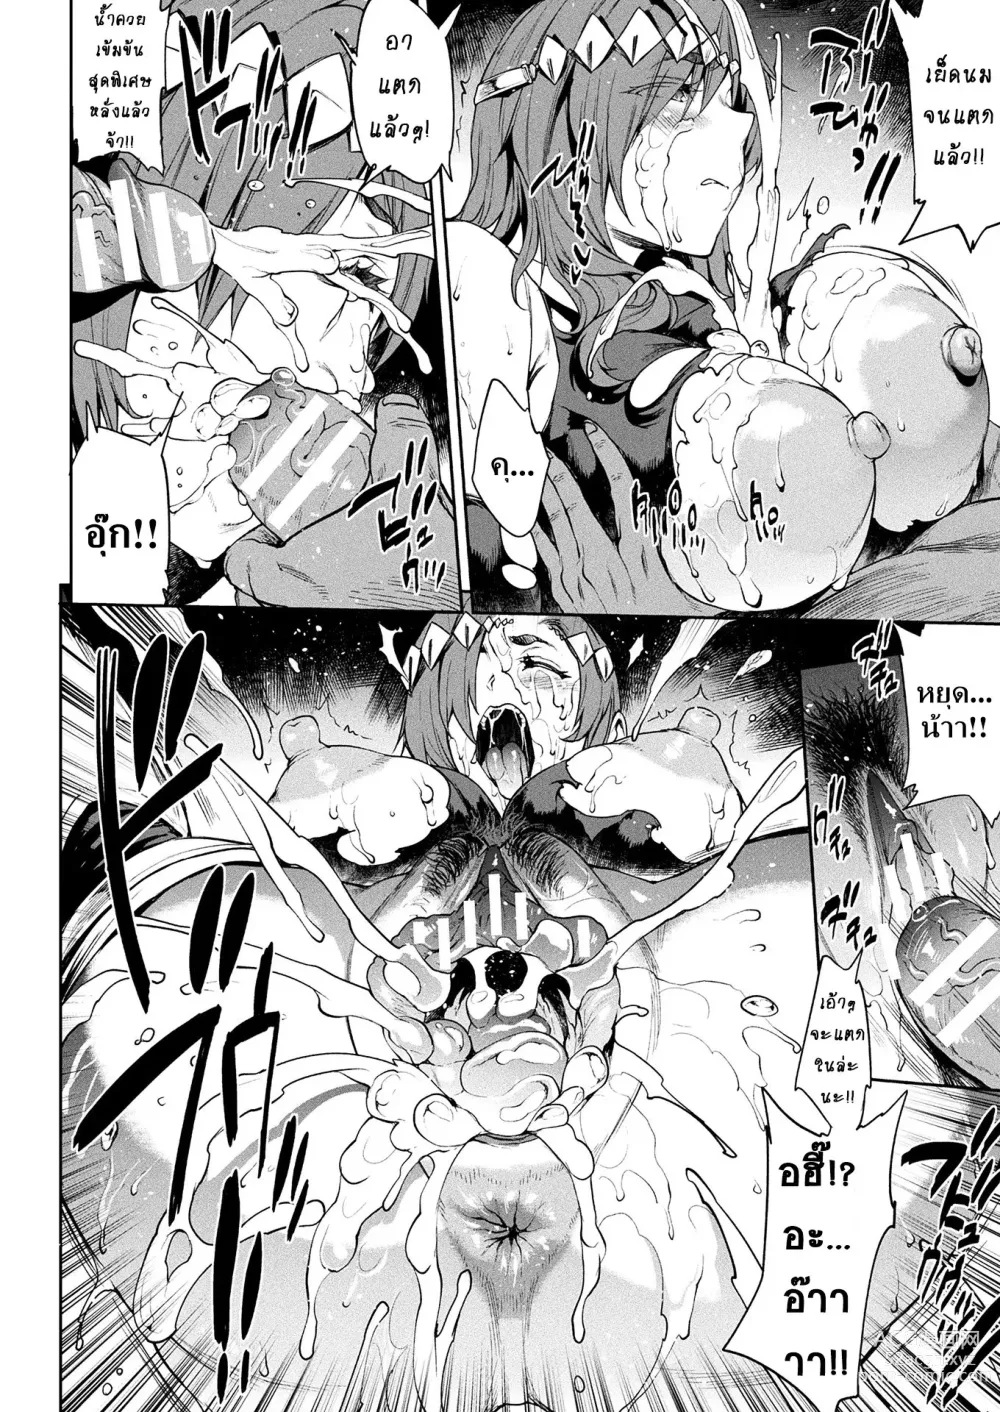 Page 14 of manga Raikou Shinki Igis Magia III -PANDRA saga 3rd ignition-